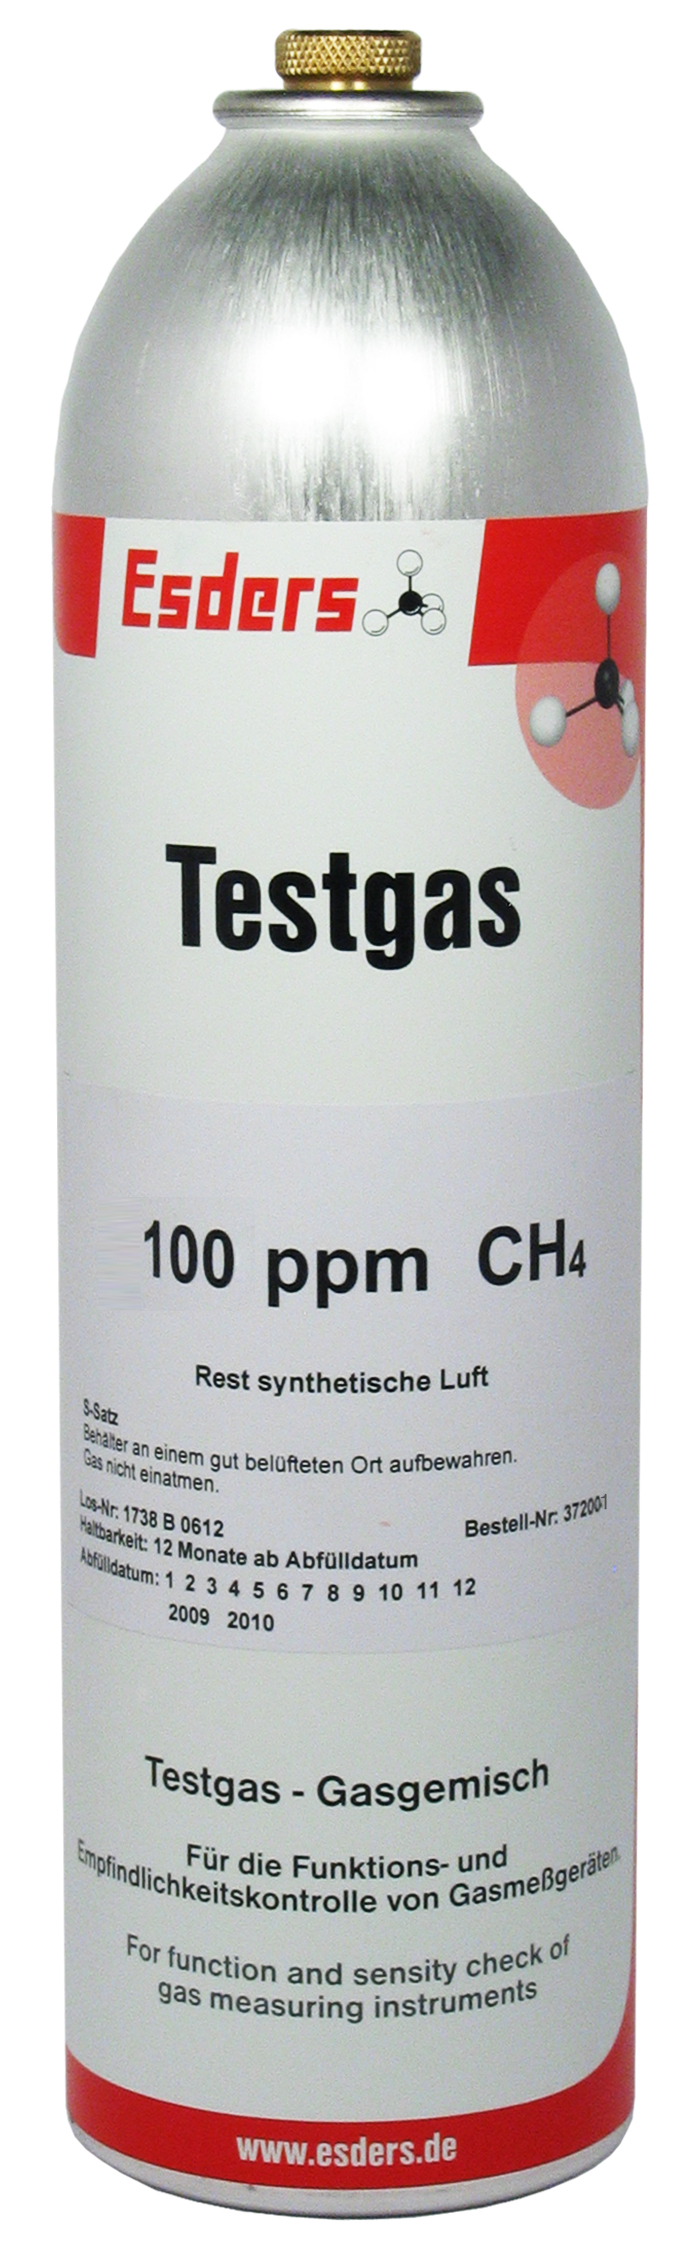 Test gas can 100 ppm methane 1 l - 12 bar